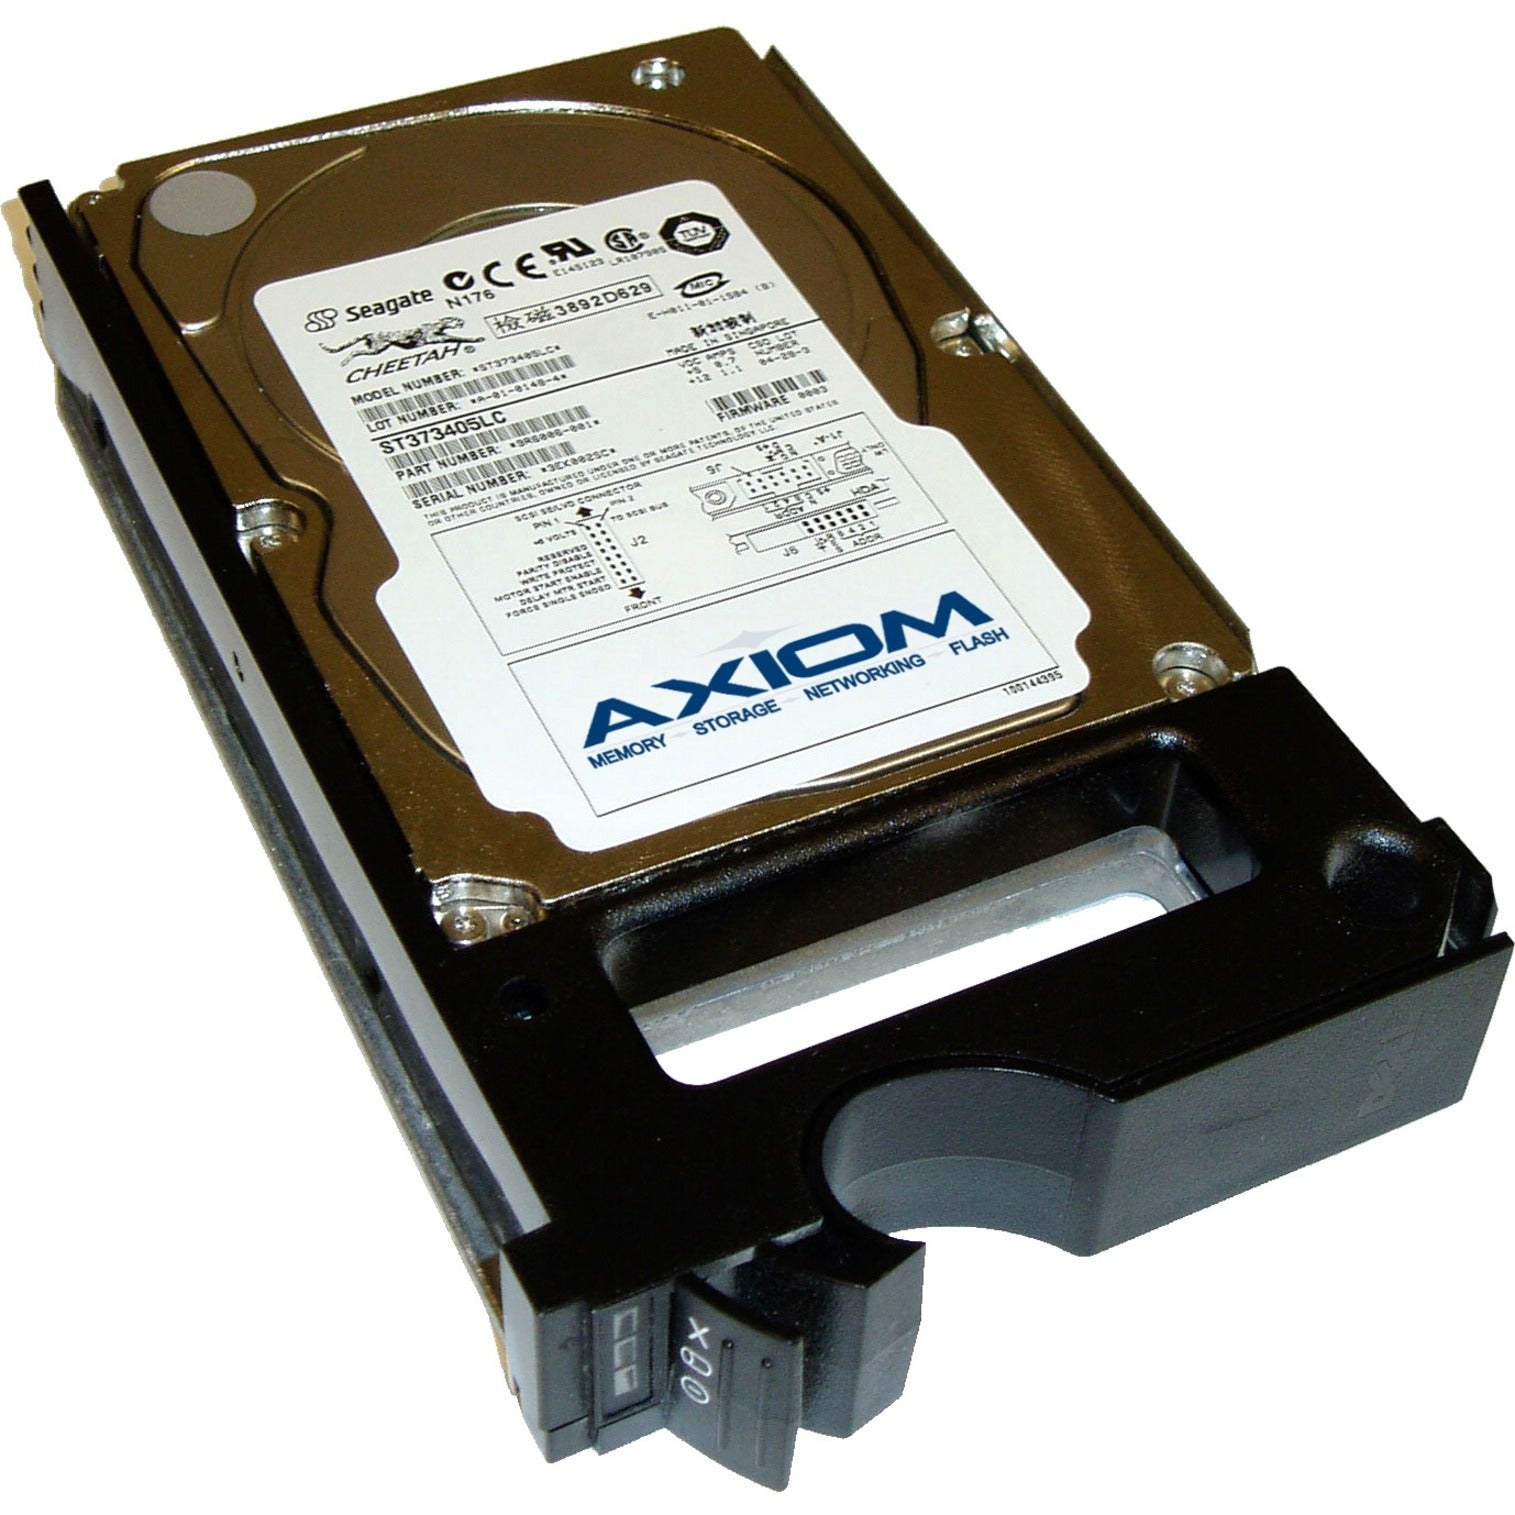 Accortec 67Y2617-ACC Festplatte 450 GB 35" Intern SAS (6Gb/s SAS)